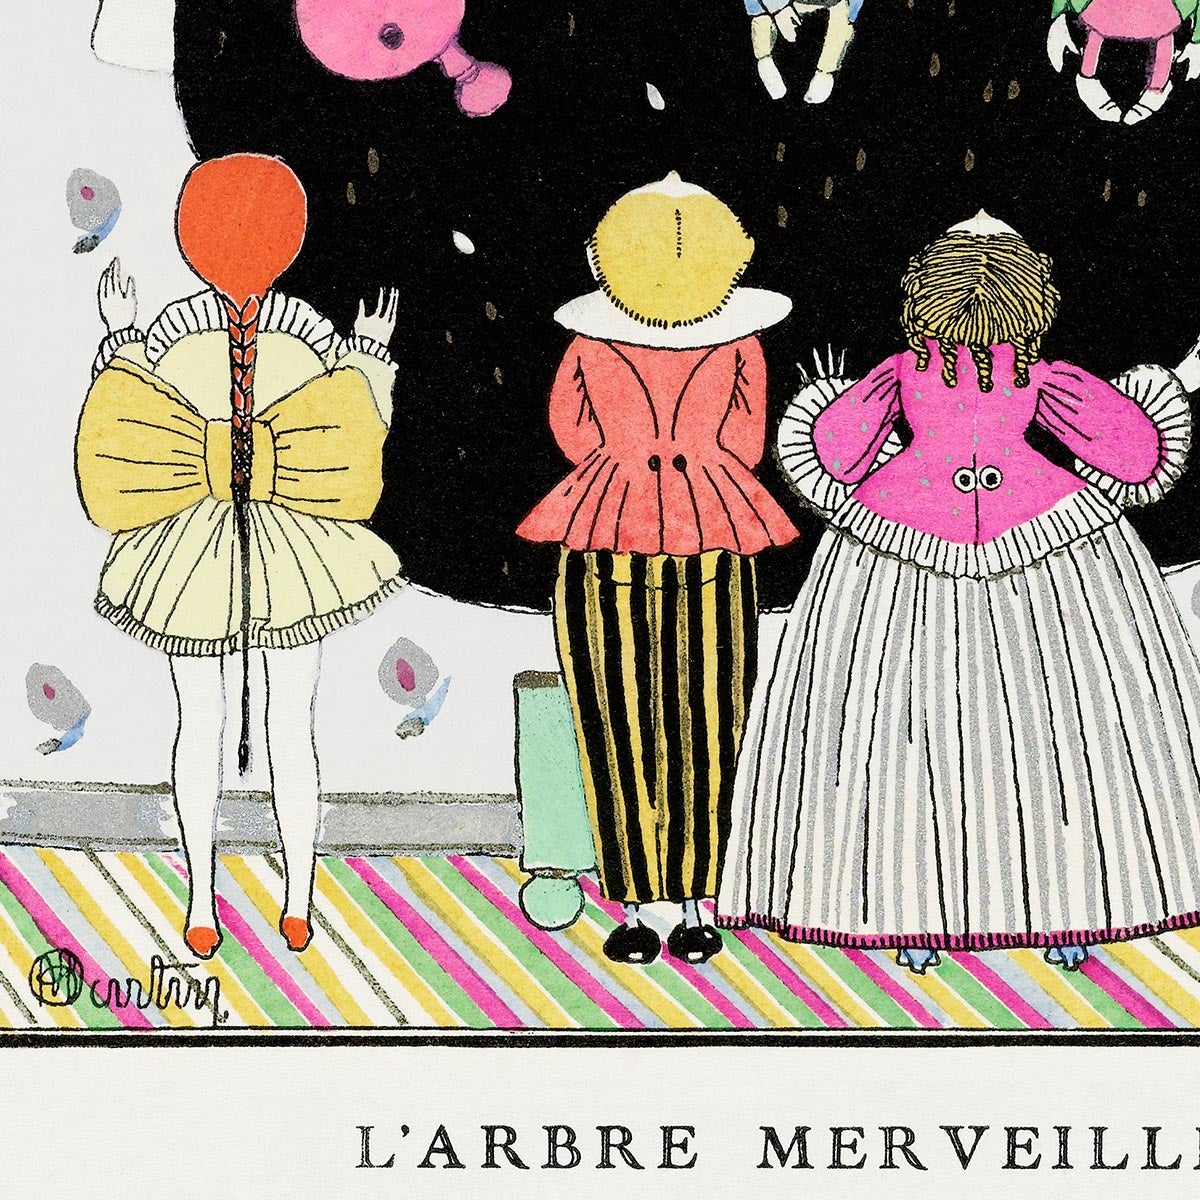 L'Arbre Merveilleux by Charles Martin